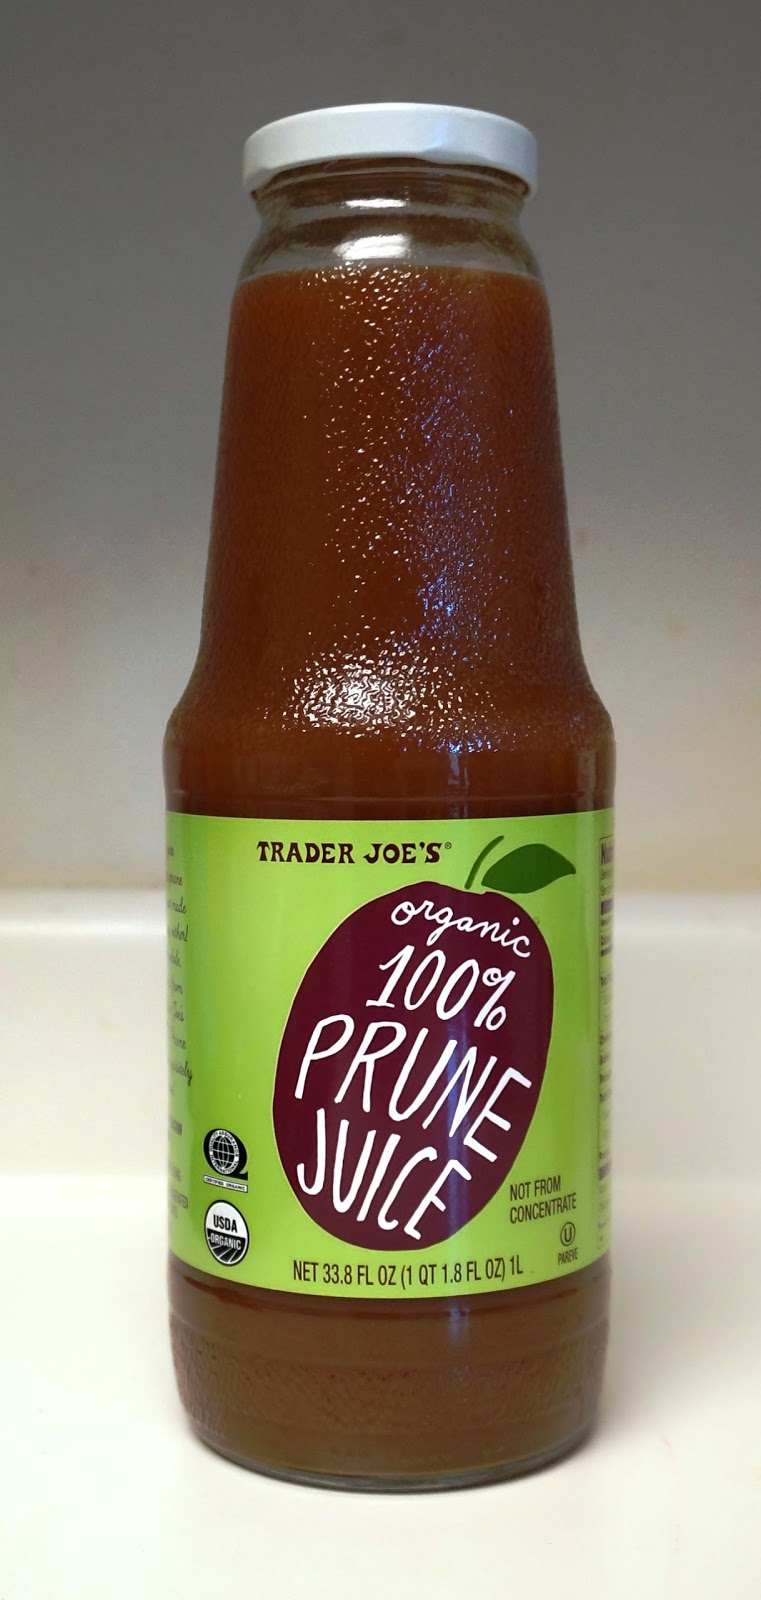 Trader Joe's Organic 100% Prune Juice